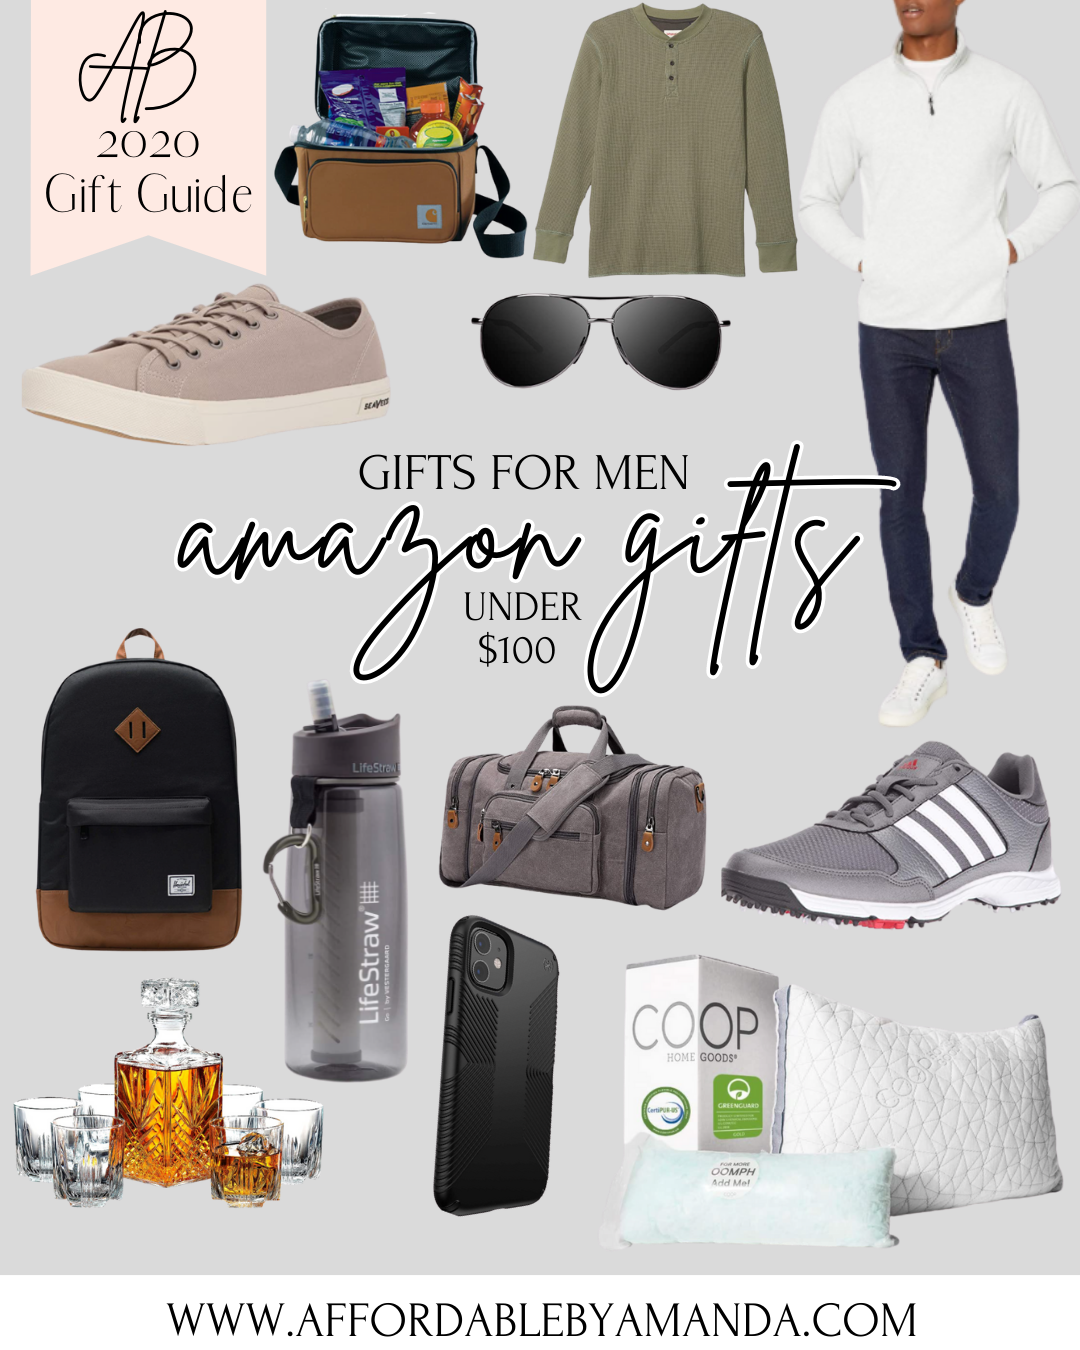 Amazon Gift Ideas  Affordable by Amanda